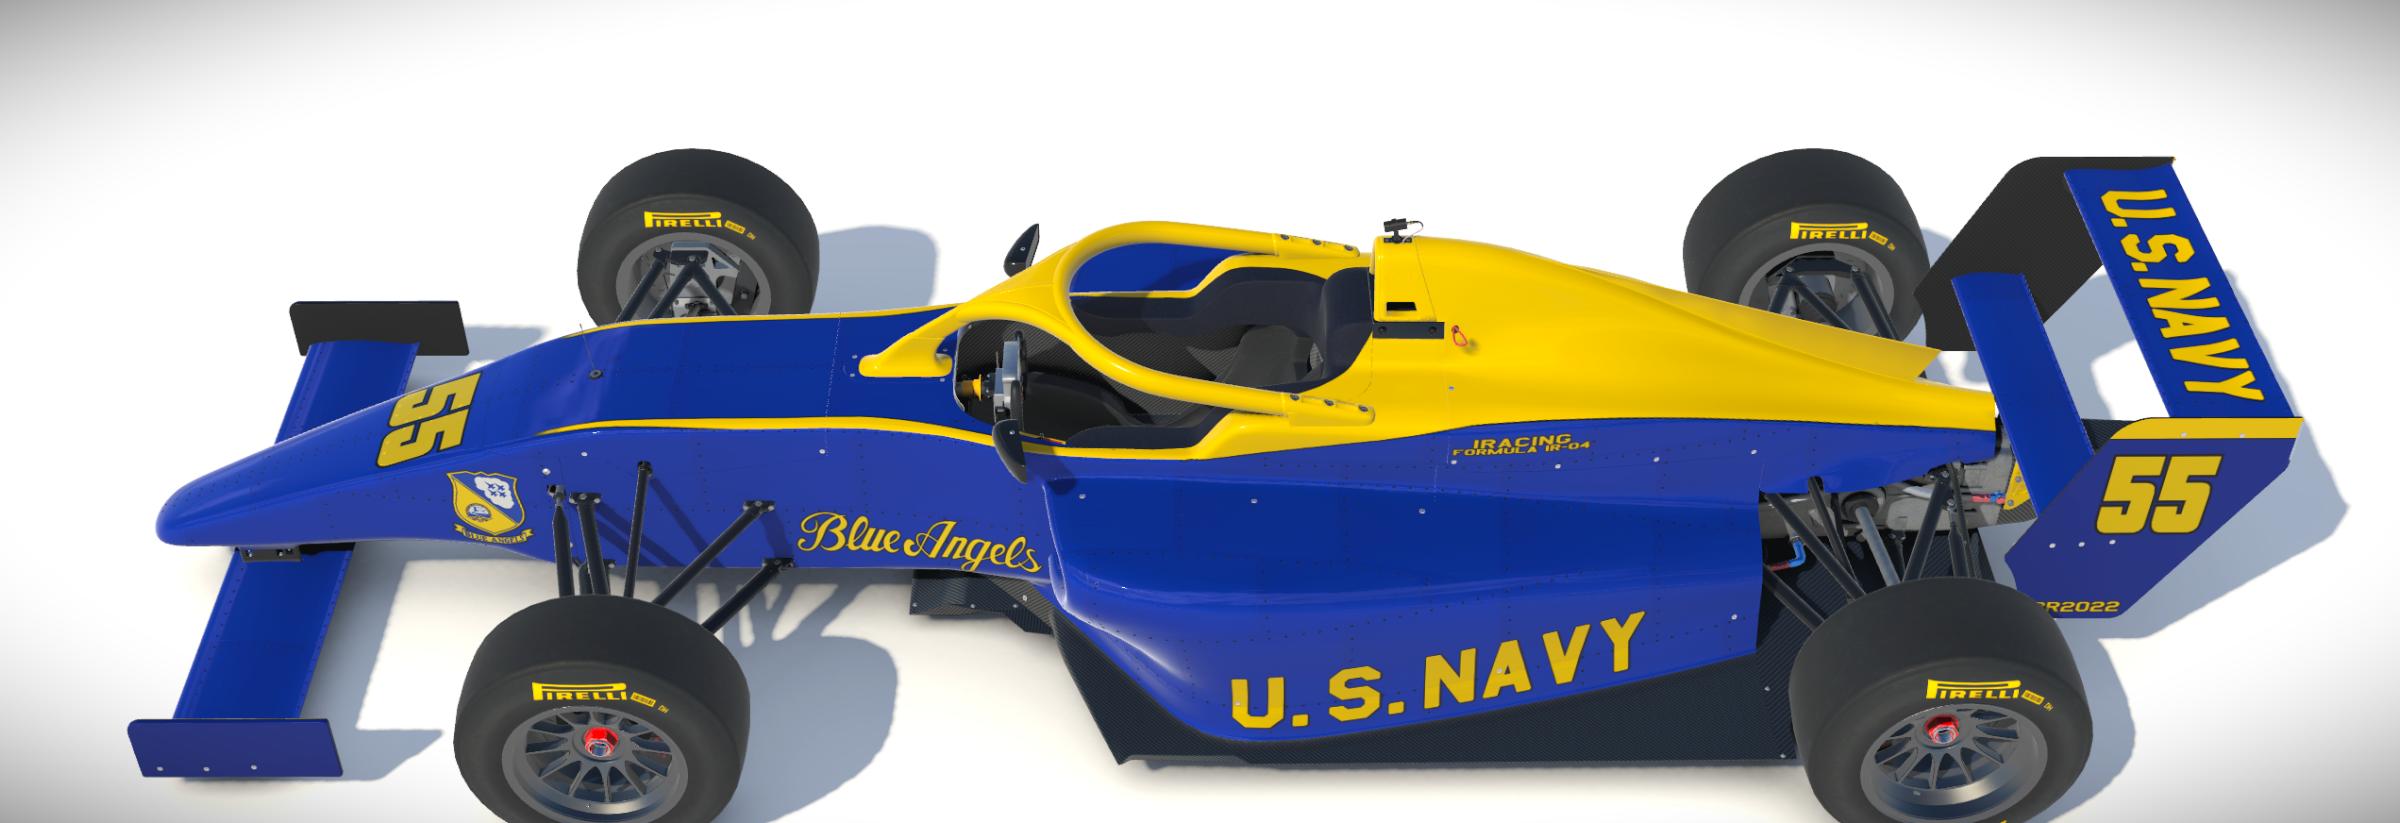 Preview of US Navy Blue Angels themed Formula iR-04 by Daniel Kranefuss